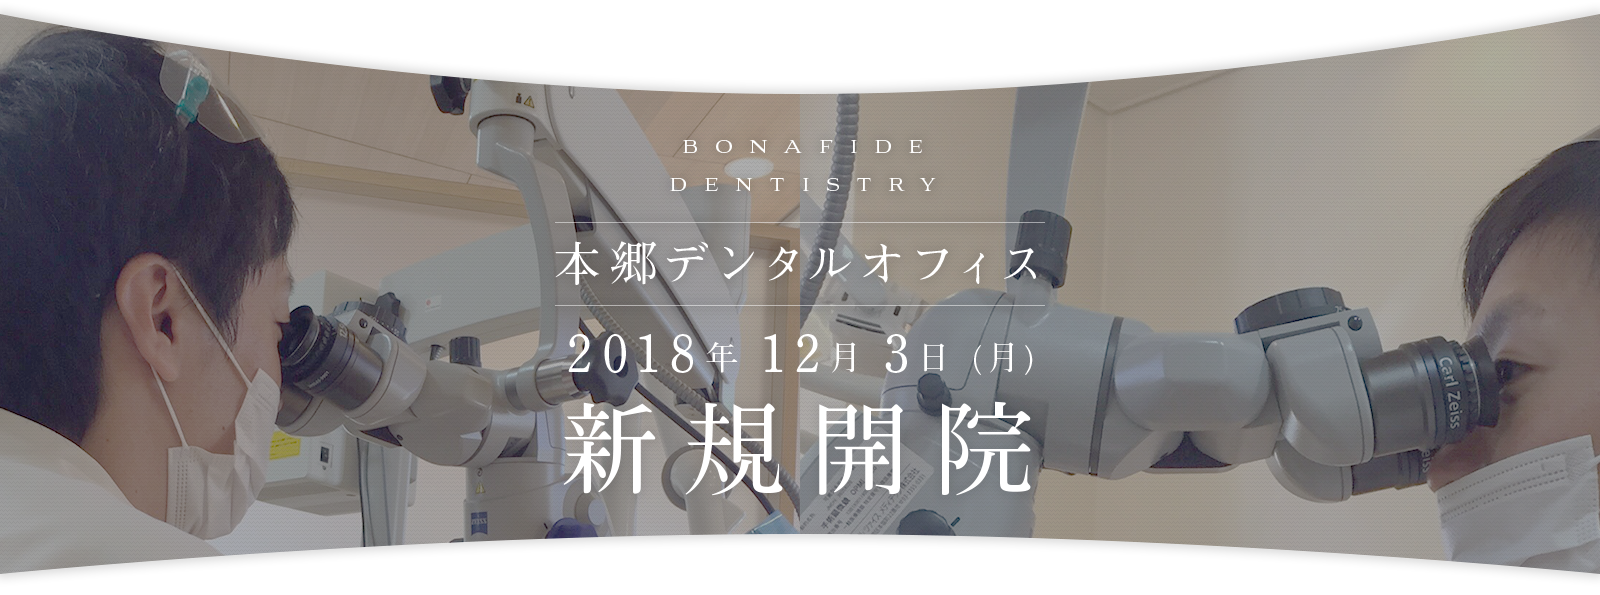 BONAFIDE DENTISTRY 本郷デンタルオフィス 2018年12月3日(月) 新規開院